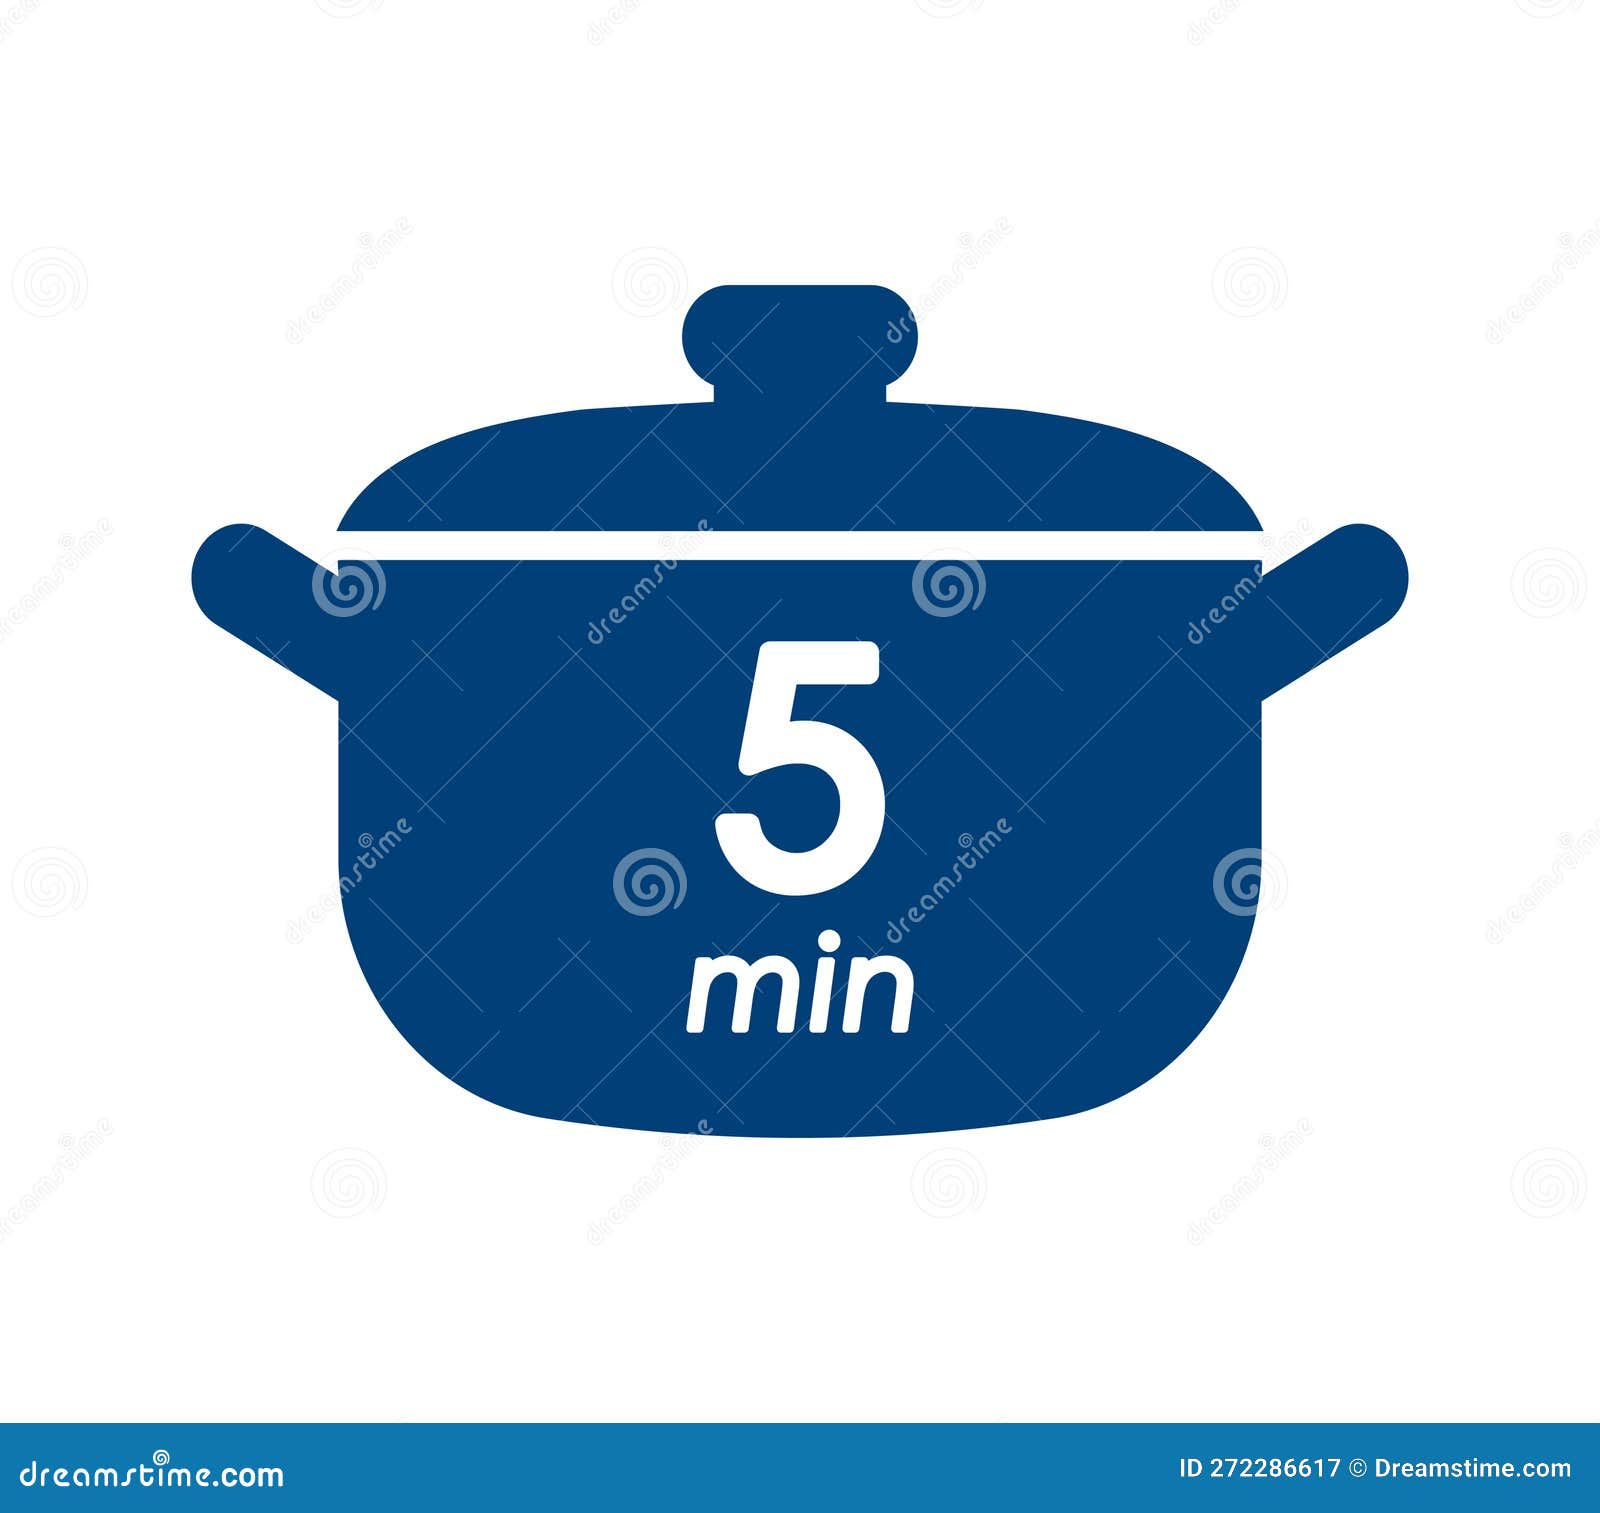 Cooking pot symbol, Stock vector